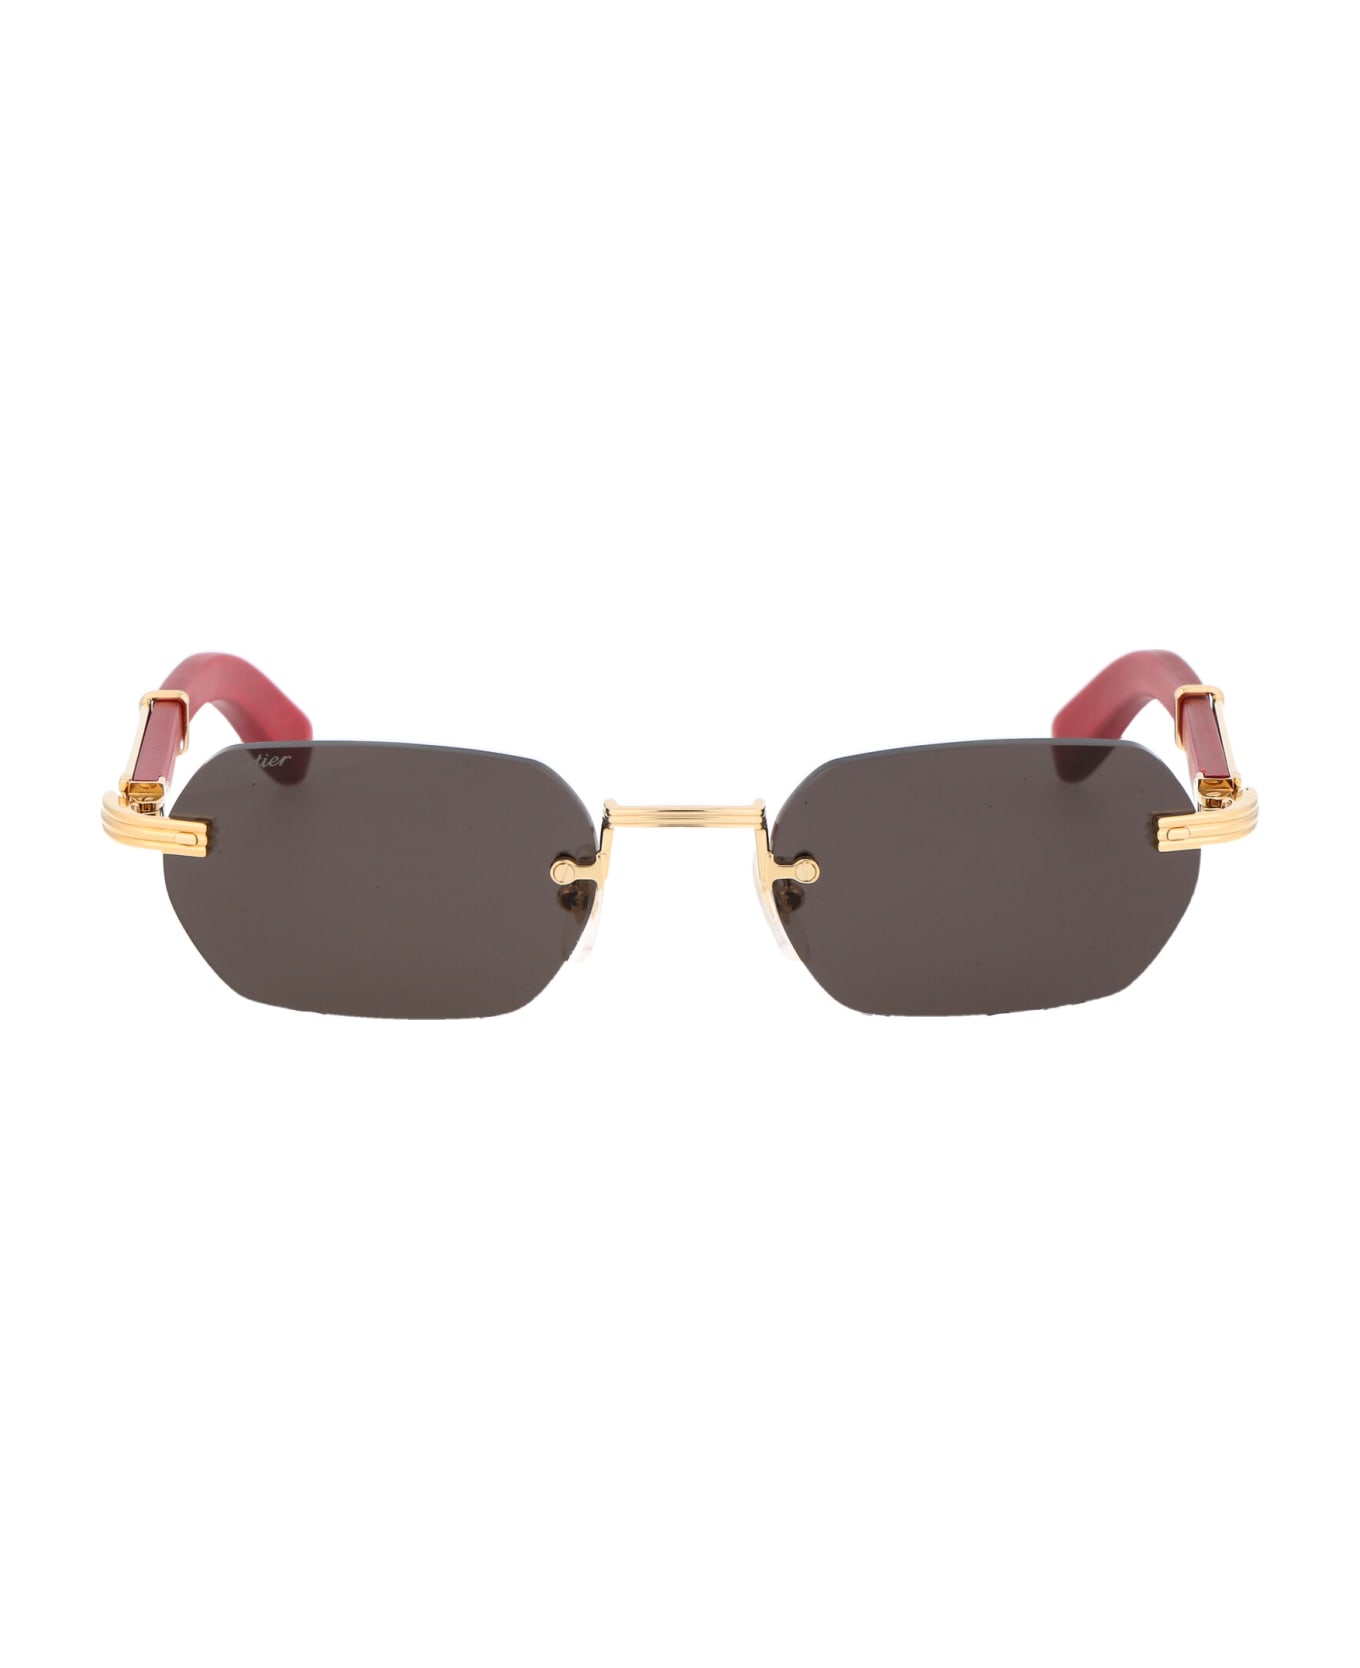 Cartier Eyewear Ct0362s Sunglasses - 004 GOLD RED GREY